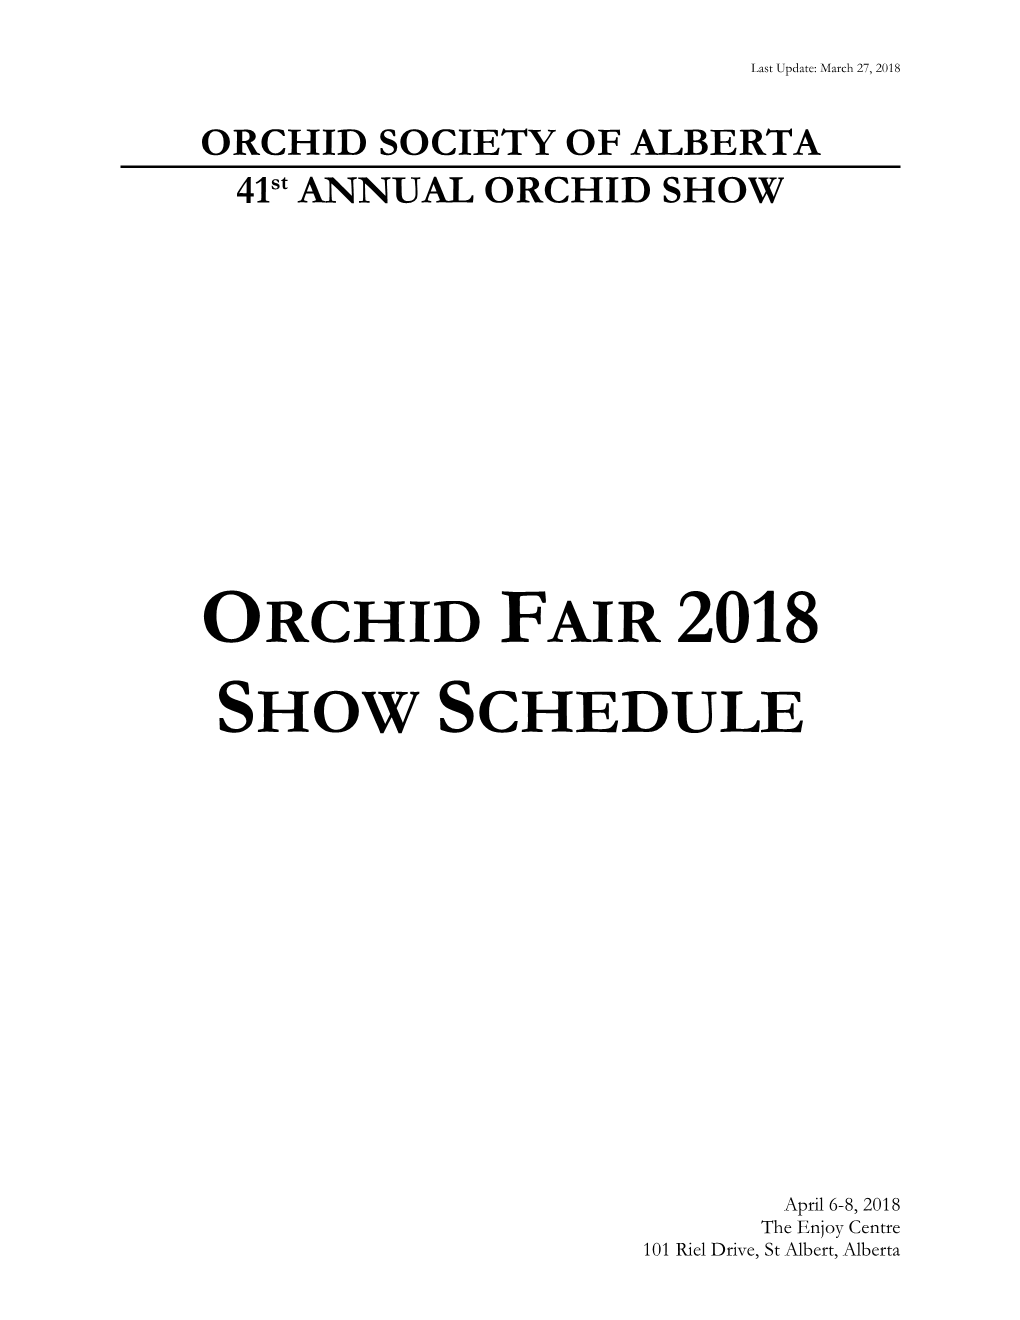 Orchid Fair 2018 Show Schedule